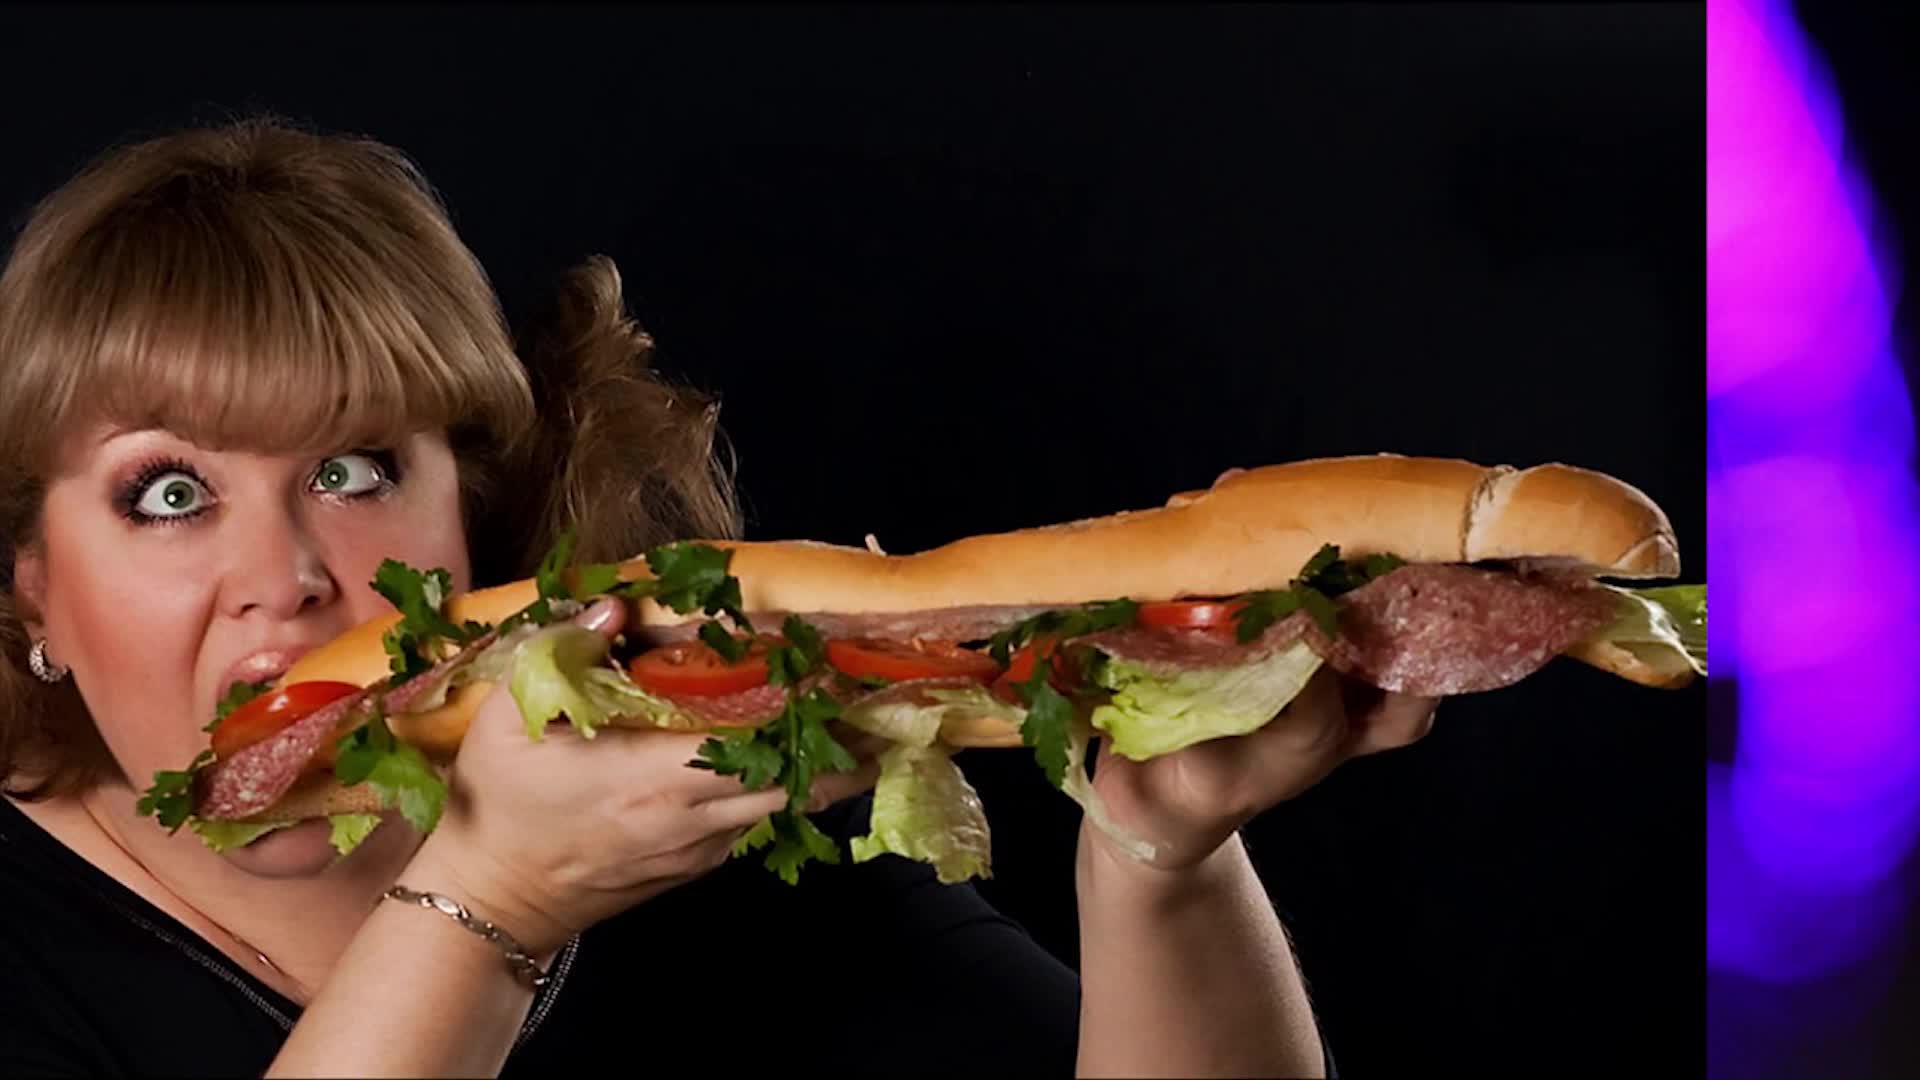 Любят повеселиться. Девушка с бутербродом. Девушка с едой. Девушка ест бутерброд. Девушка Обжора.